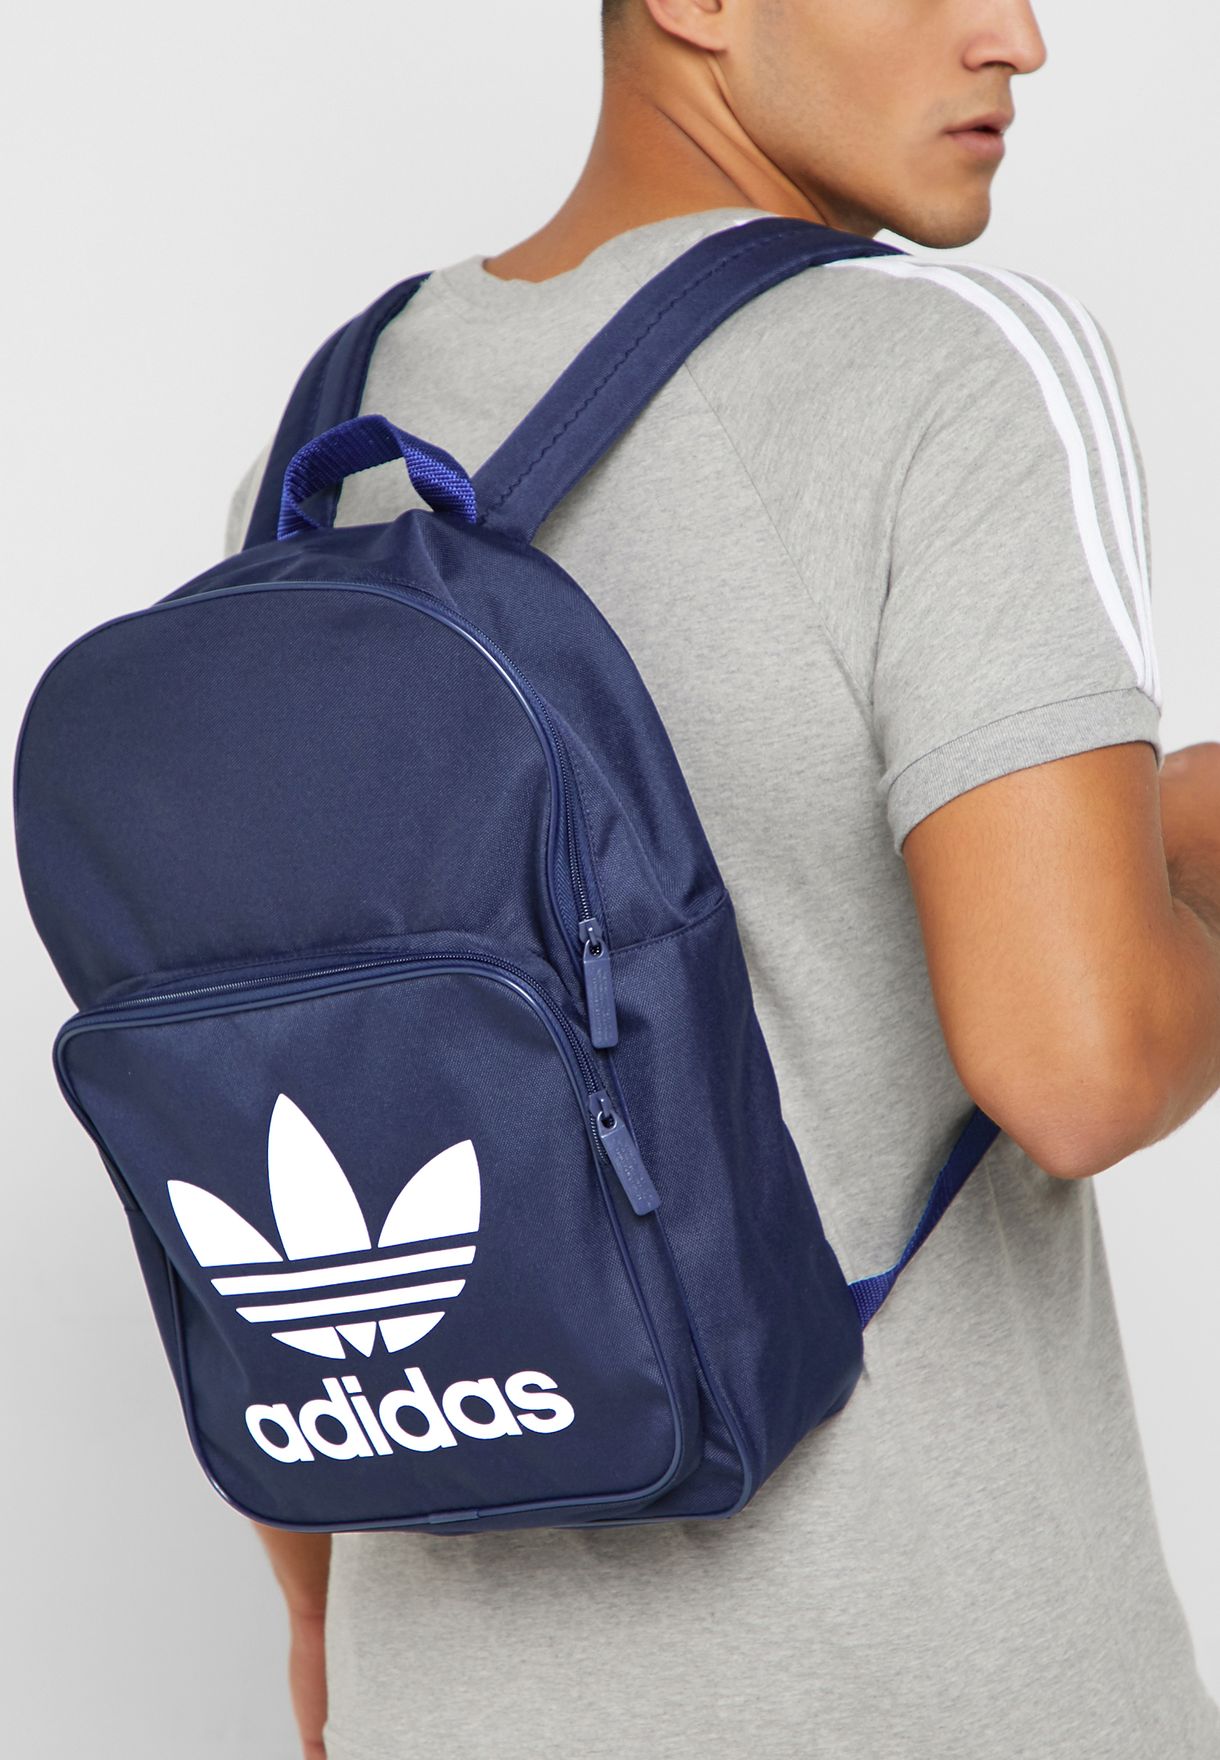 adidas original classic trefoil backpack